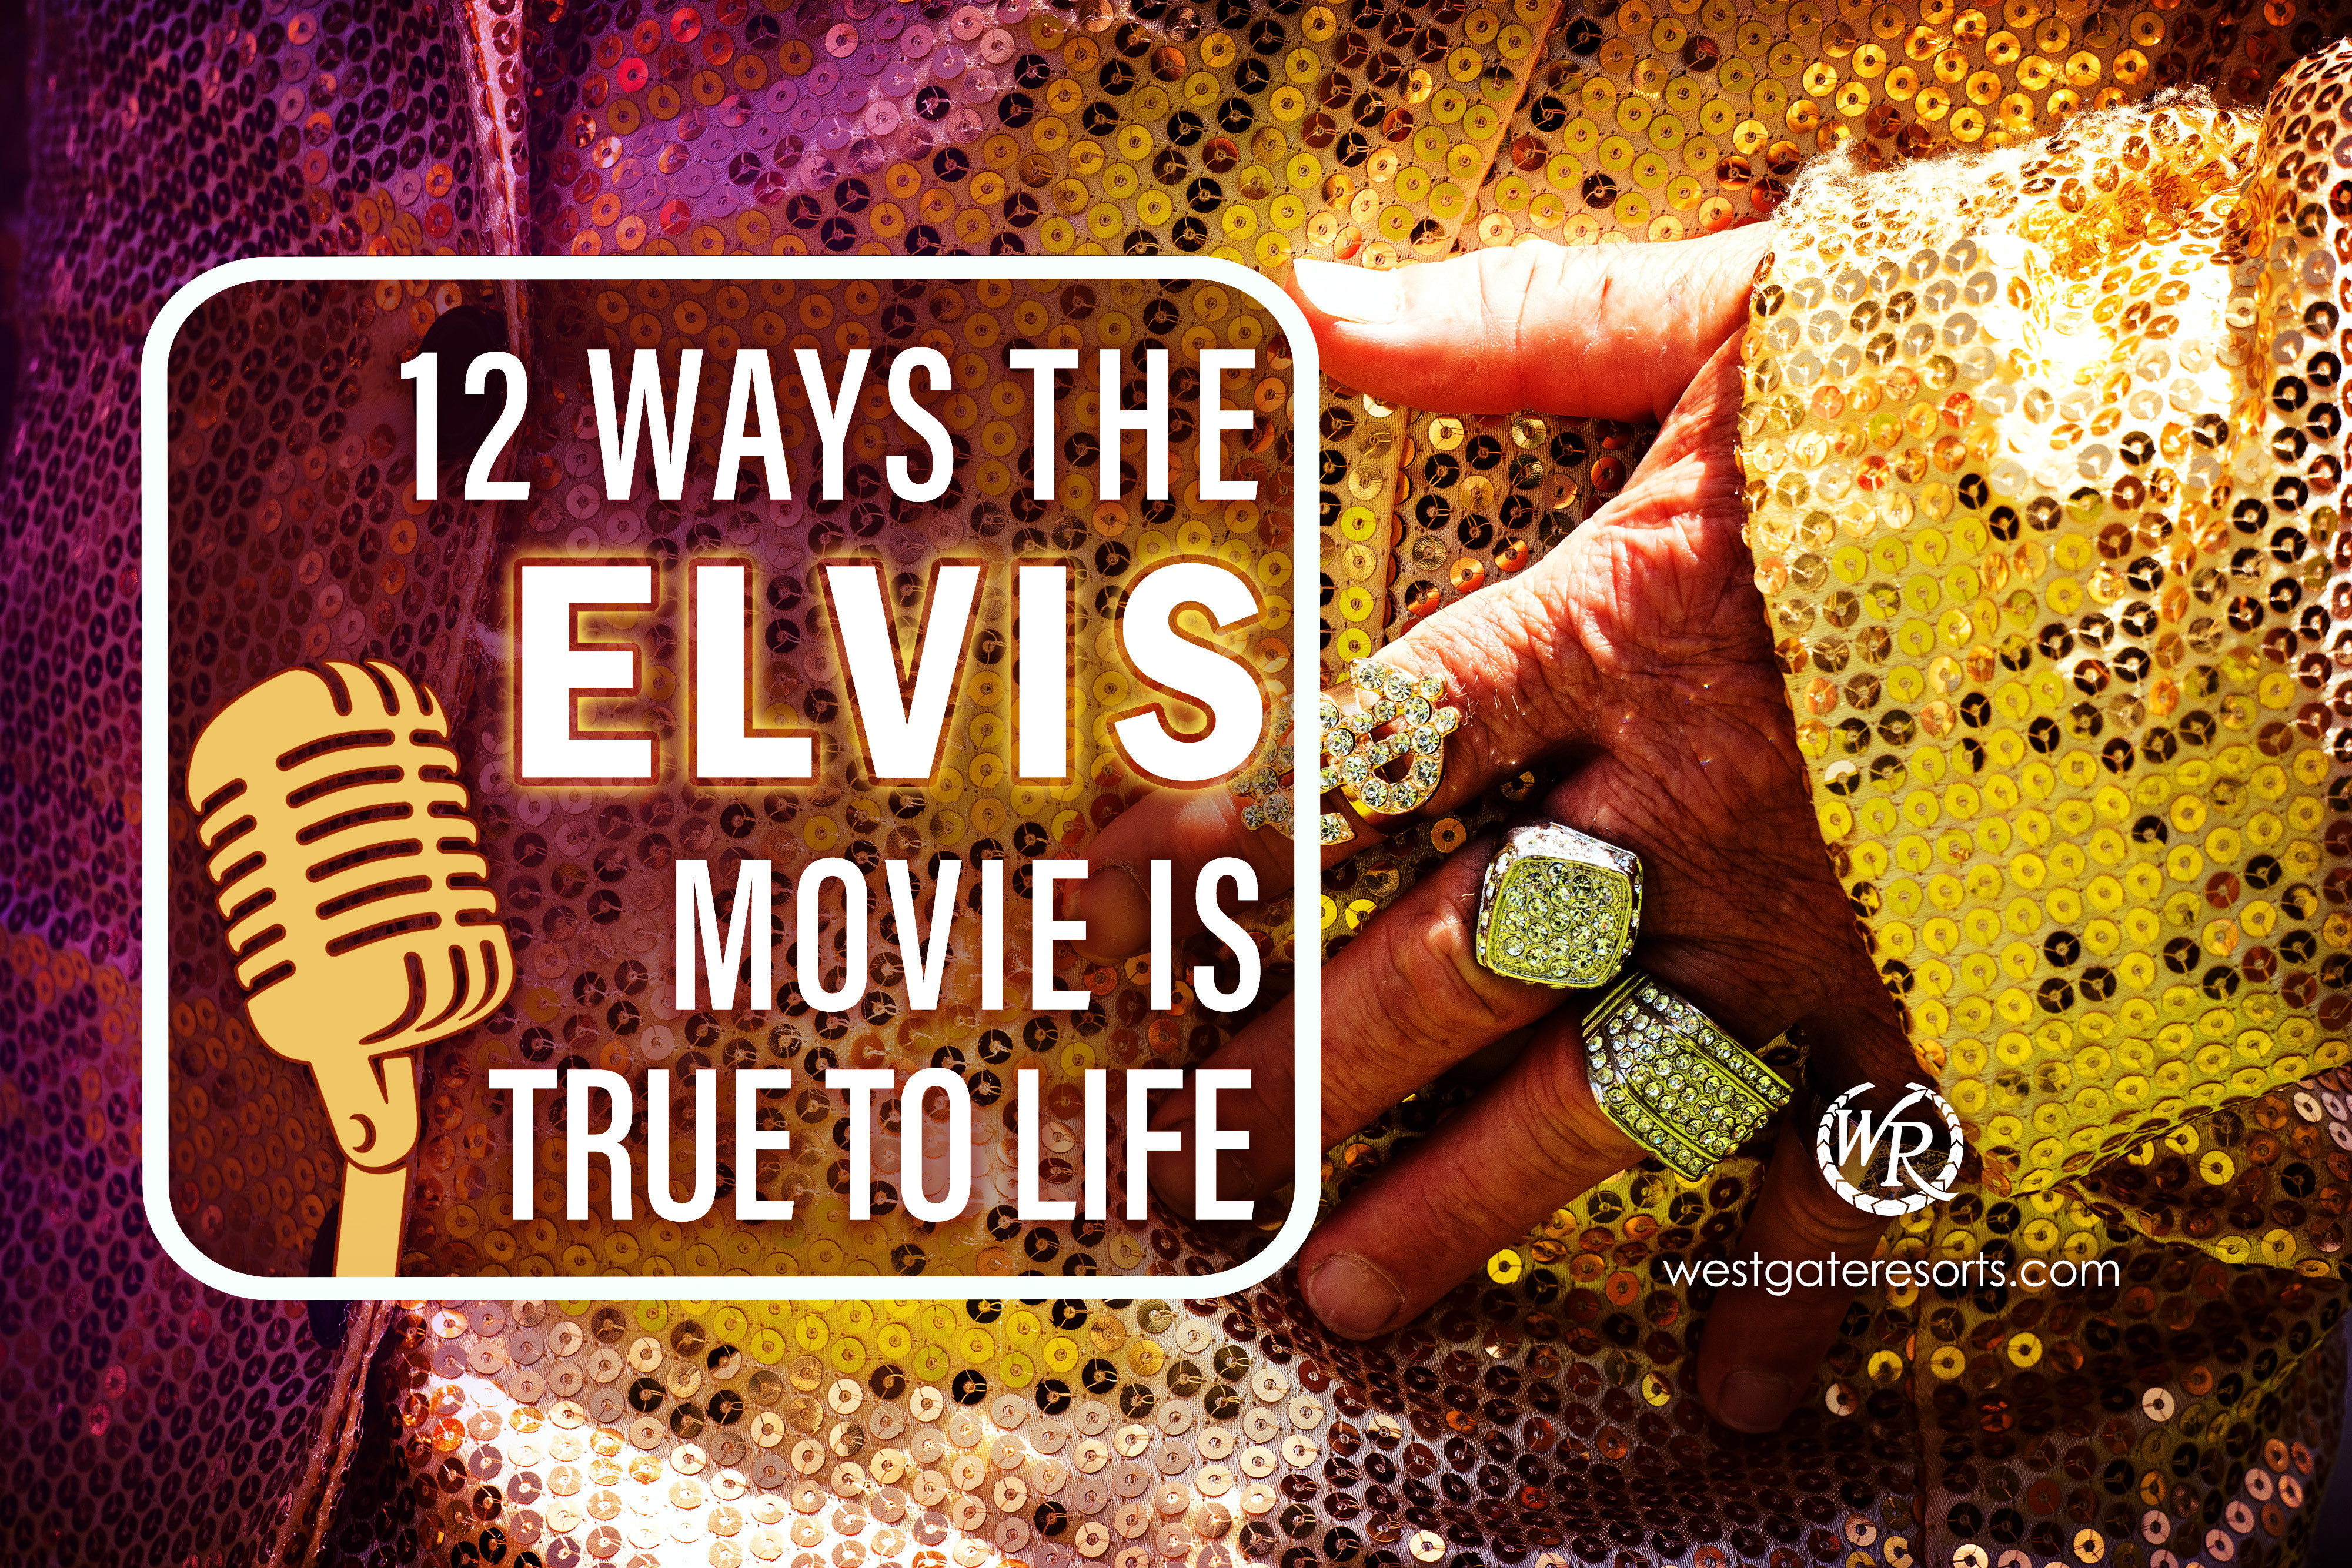 12 Ways the Elvis Movie is True to Life